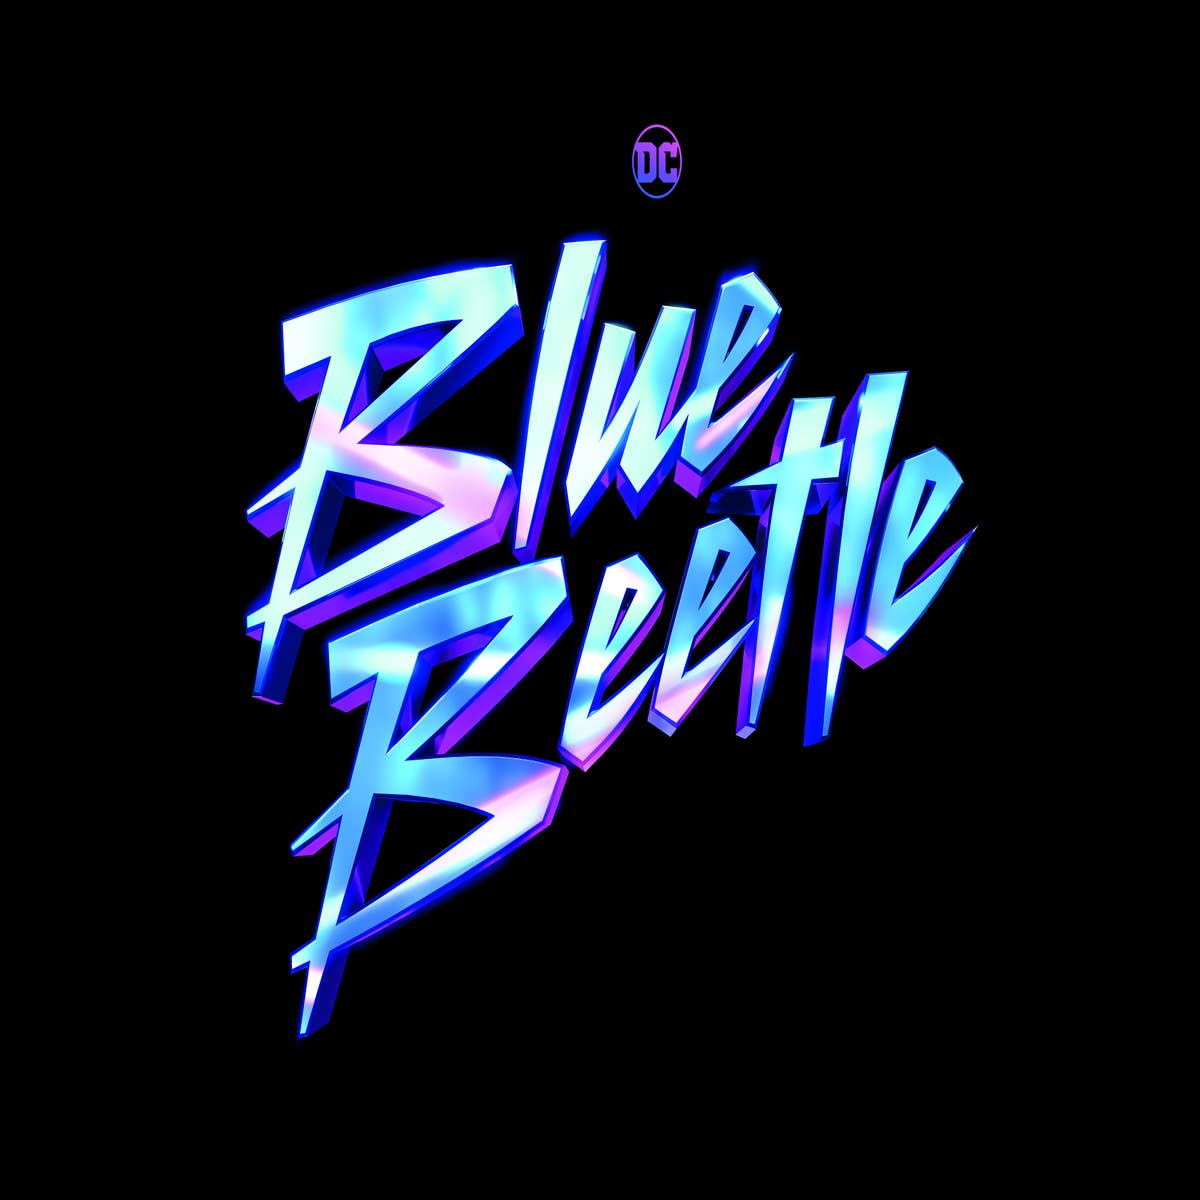 Blue Beetle: Release date, trailer, cast, plot & more - Dexerto